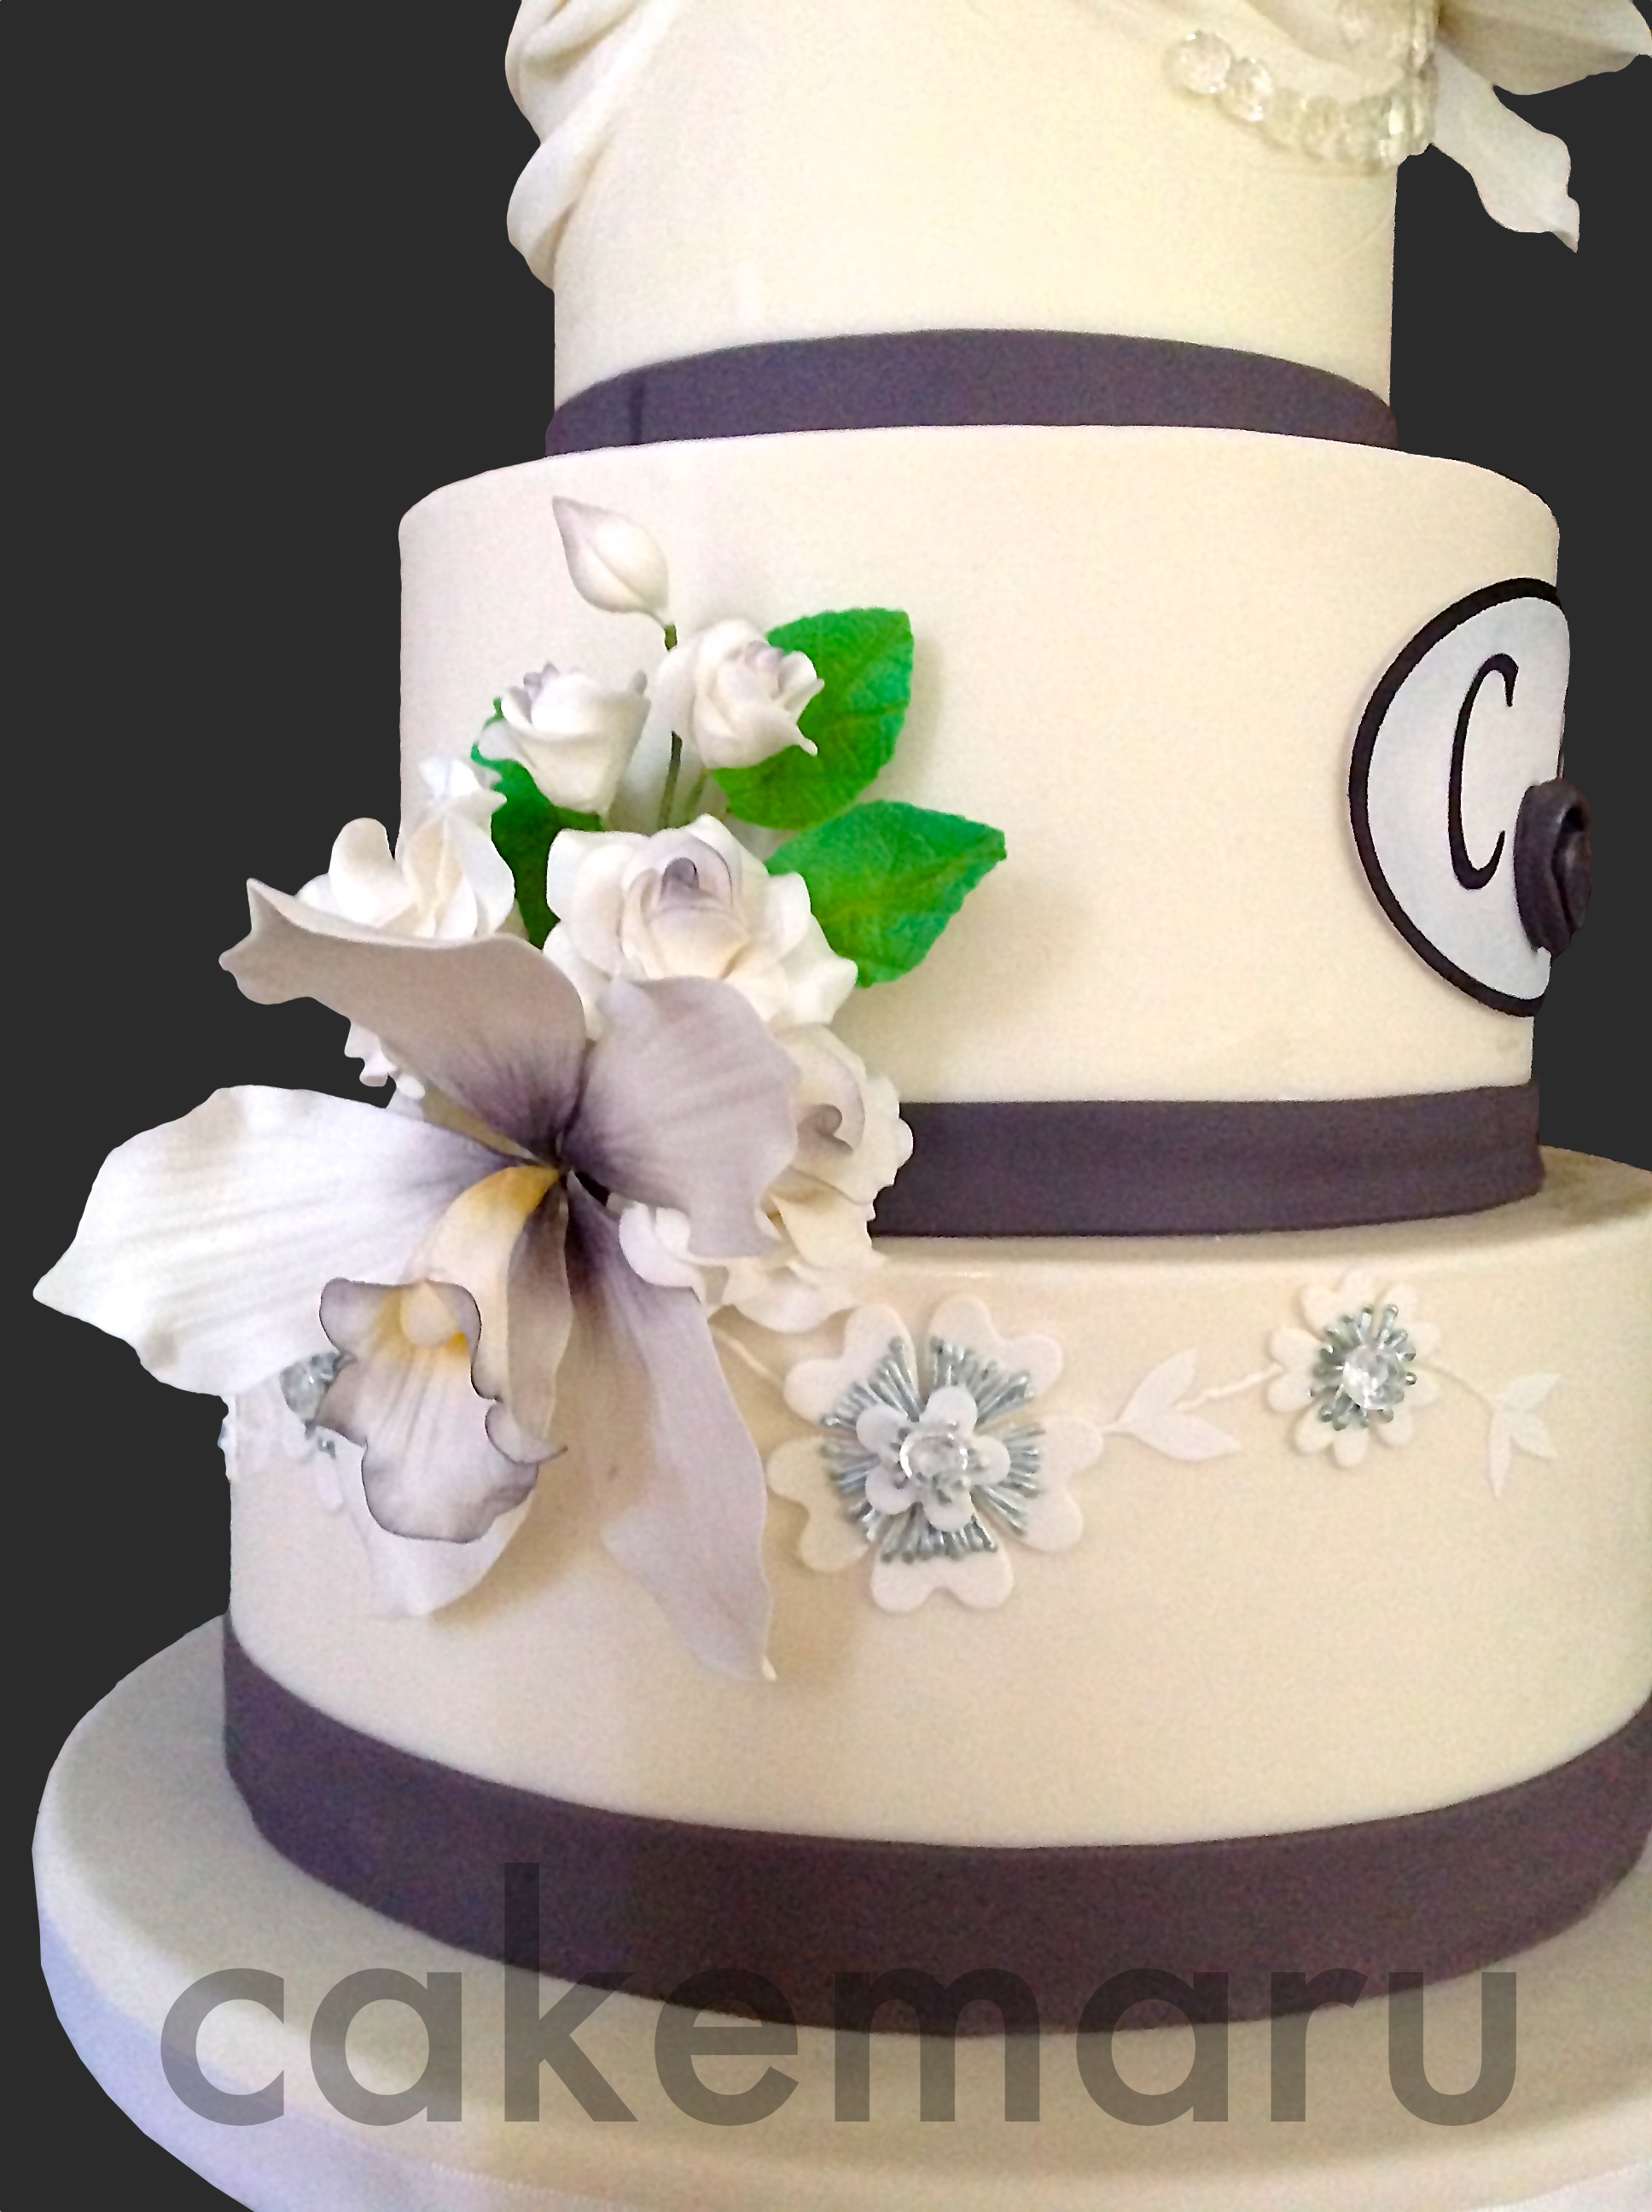 C&R Wedding Cake with name.jpg